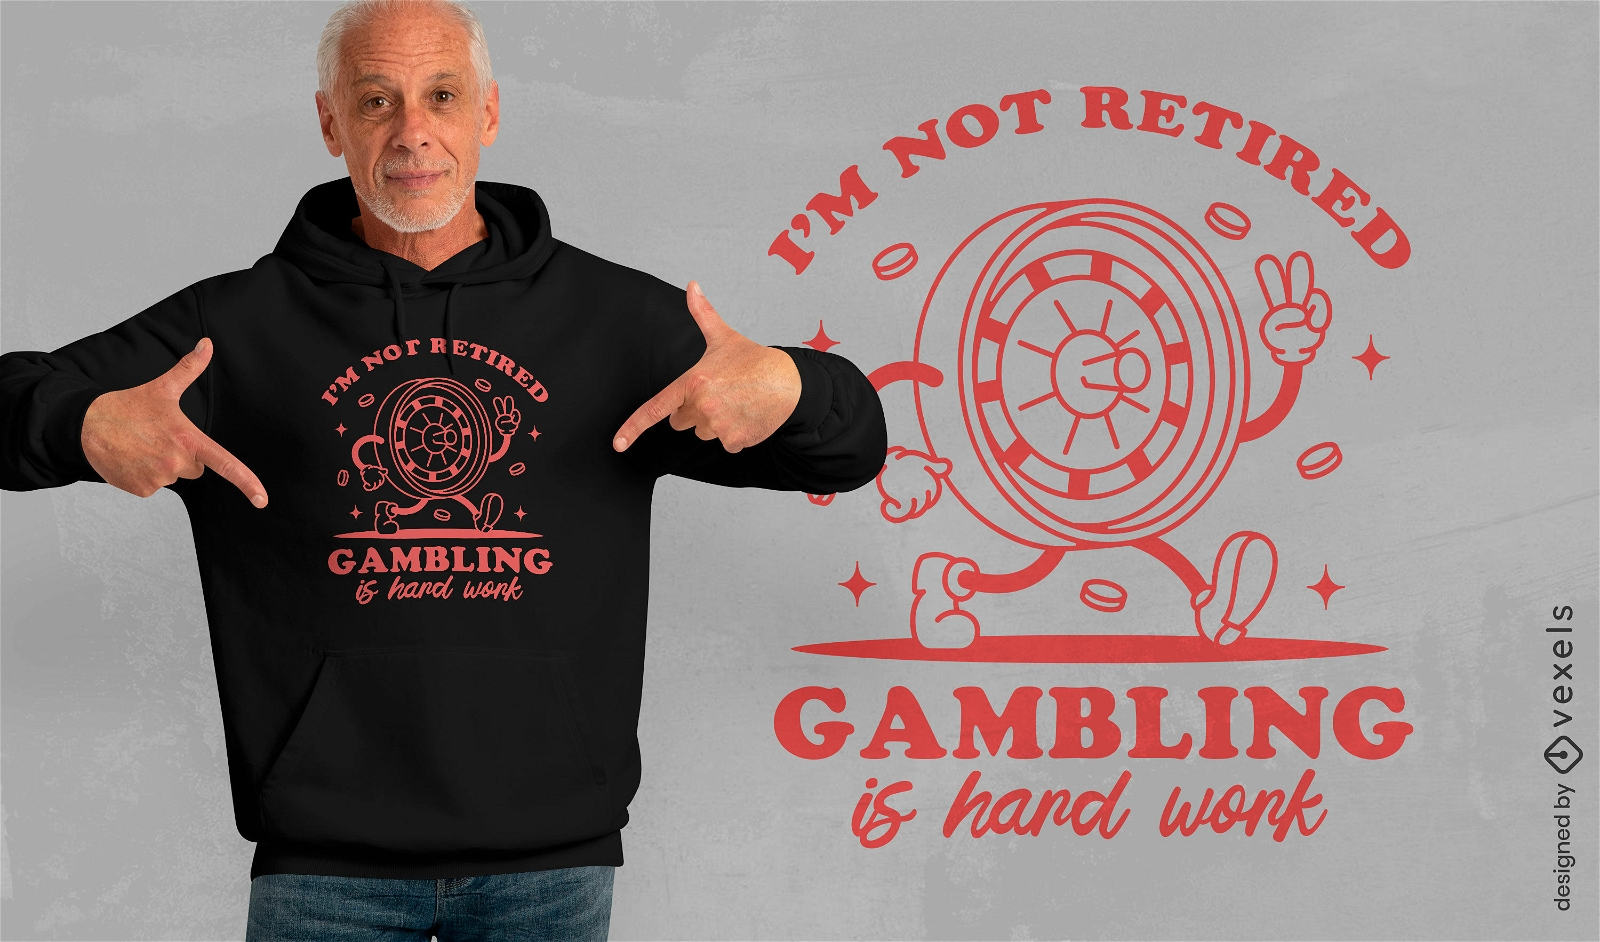 Gambling work t-shirt design